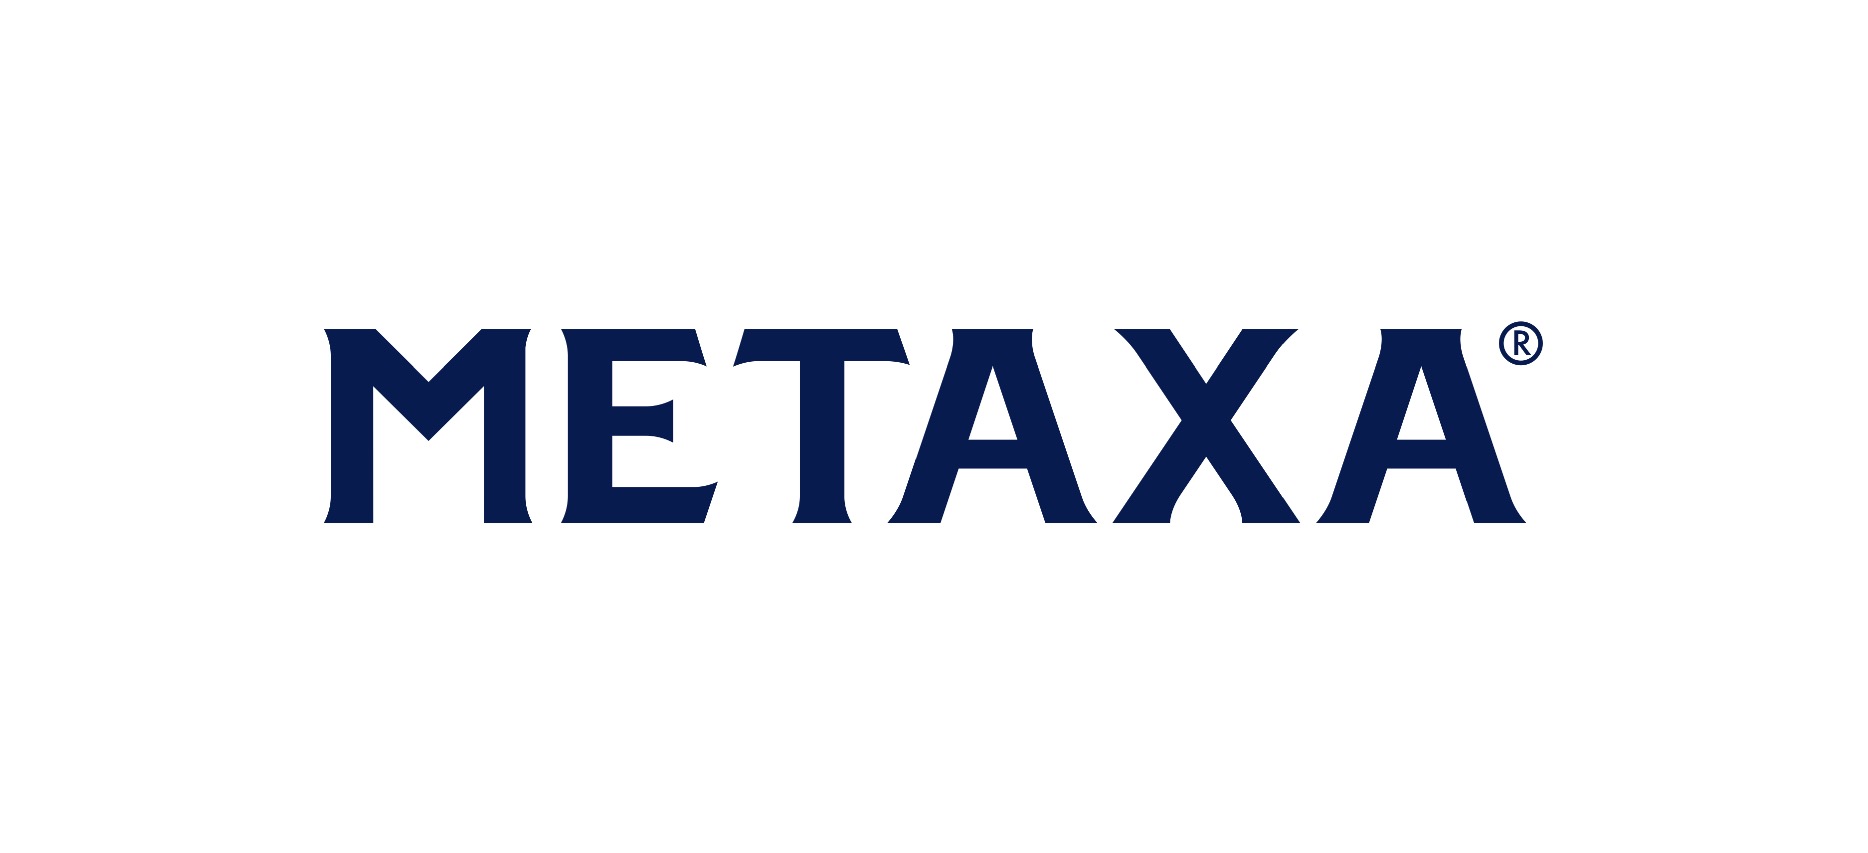 METAXA brand logo